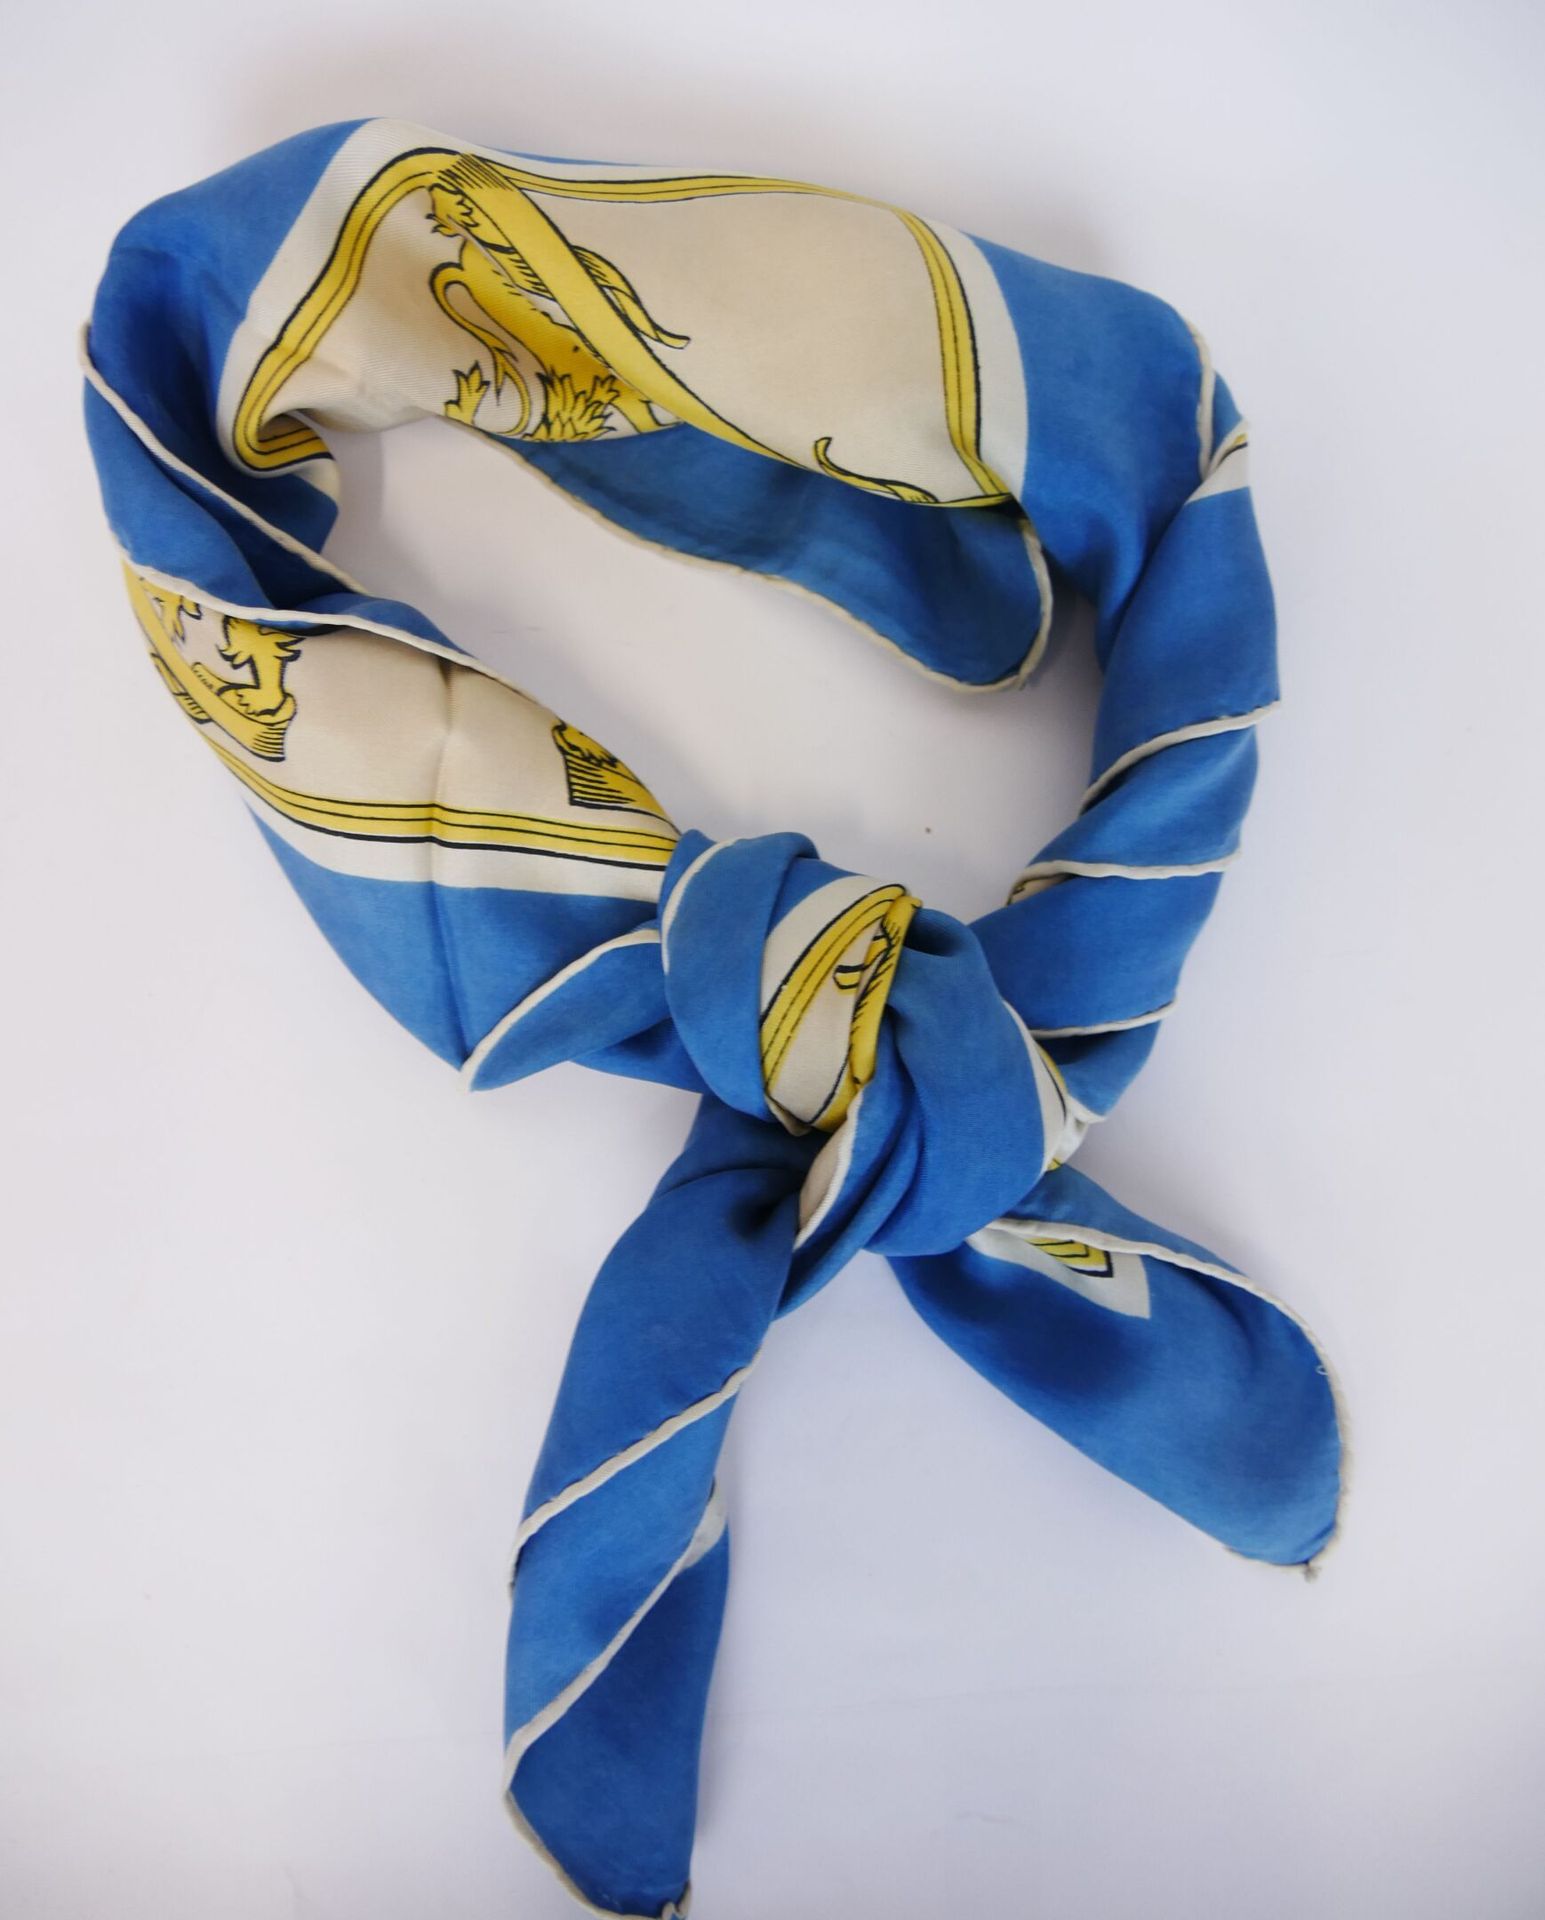 Null Collection Compagnie Internationale des Wagons-Lits

Silk scarf representin&hellip;